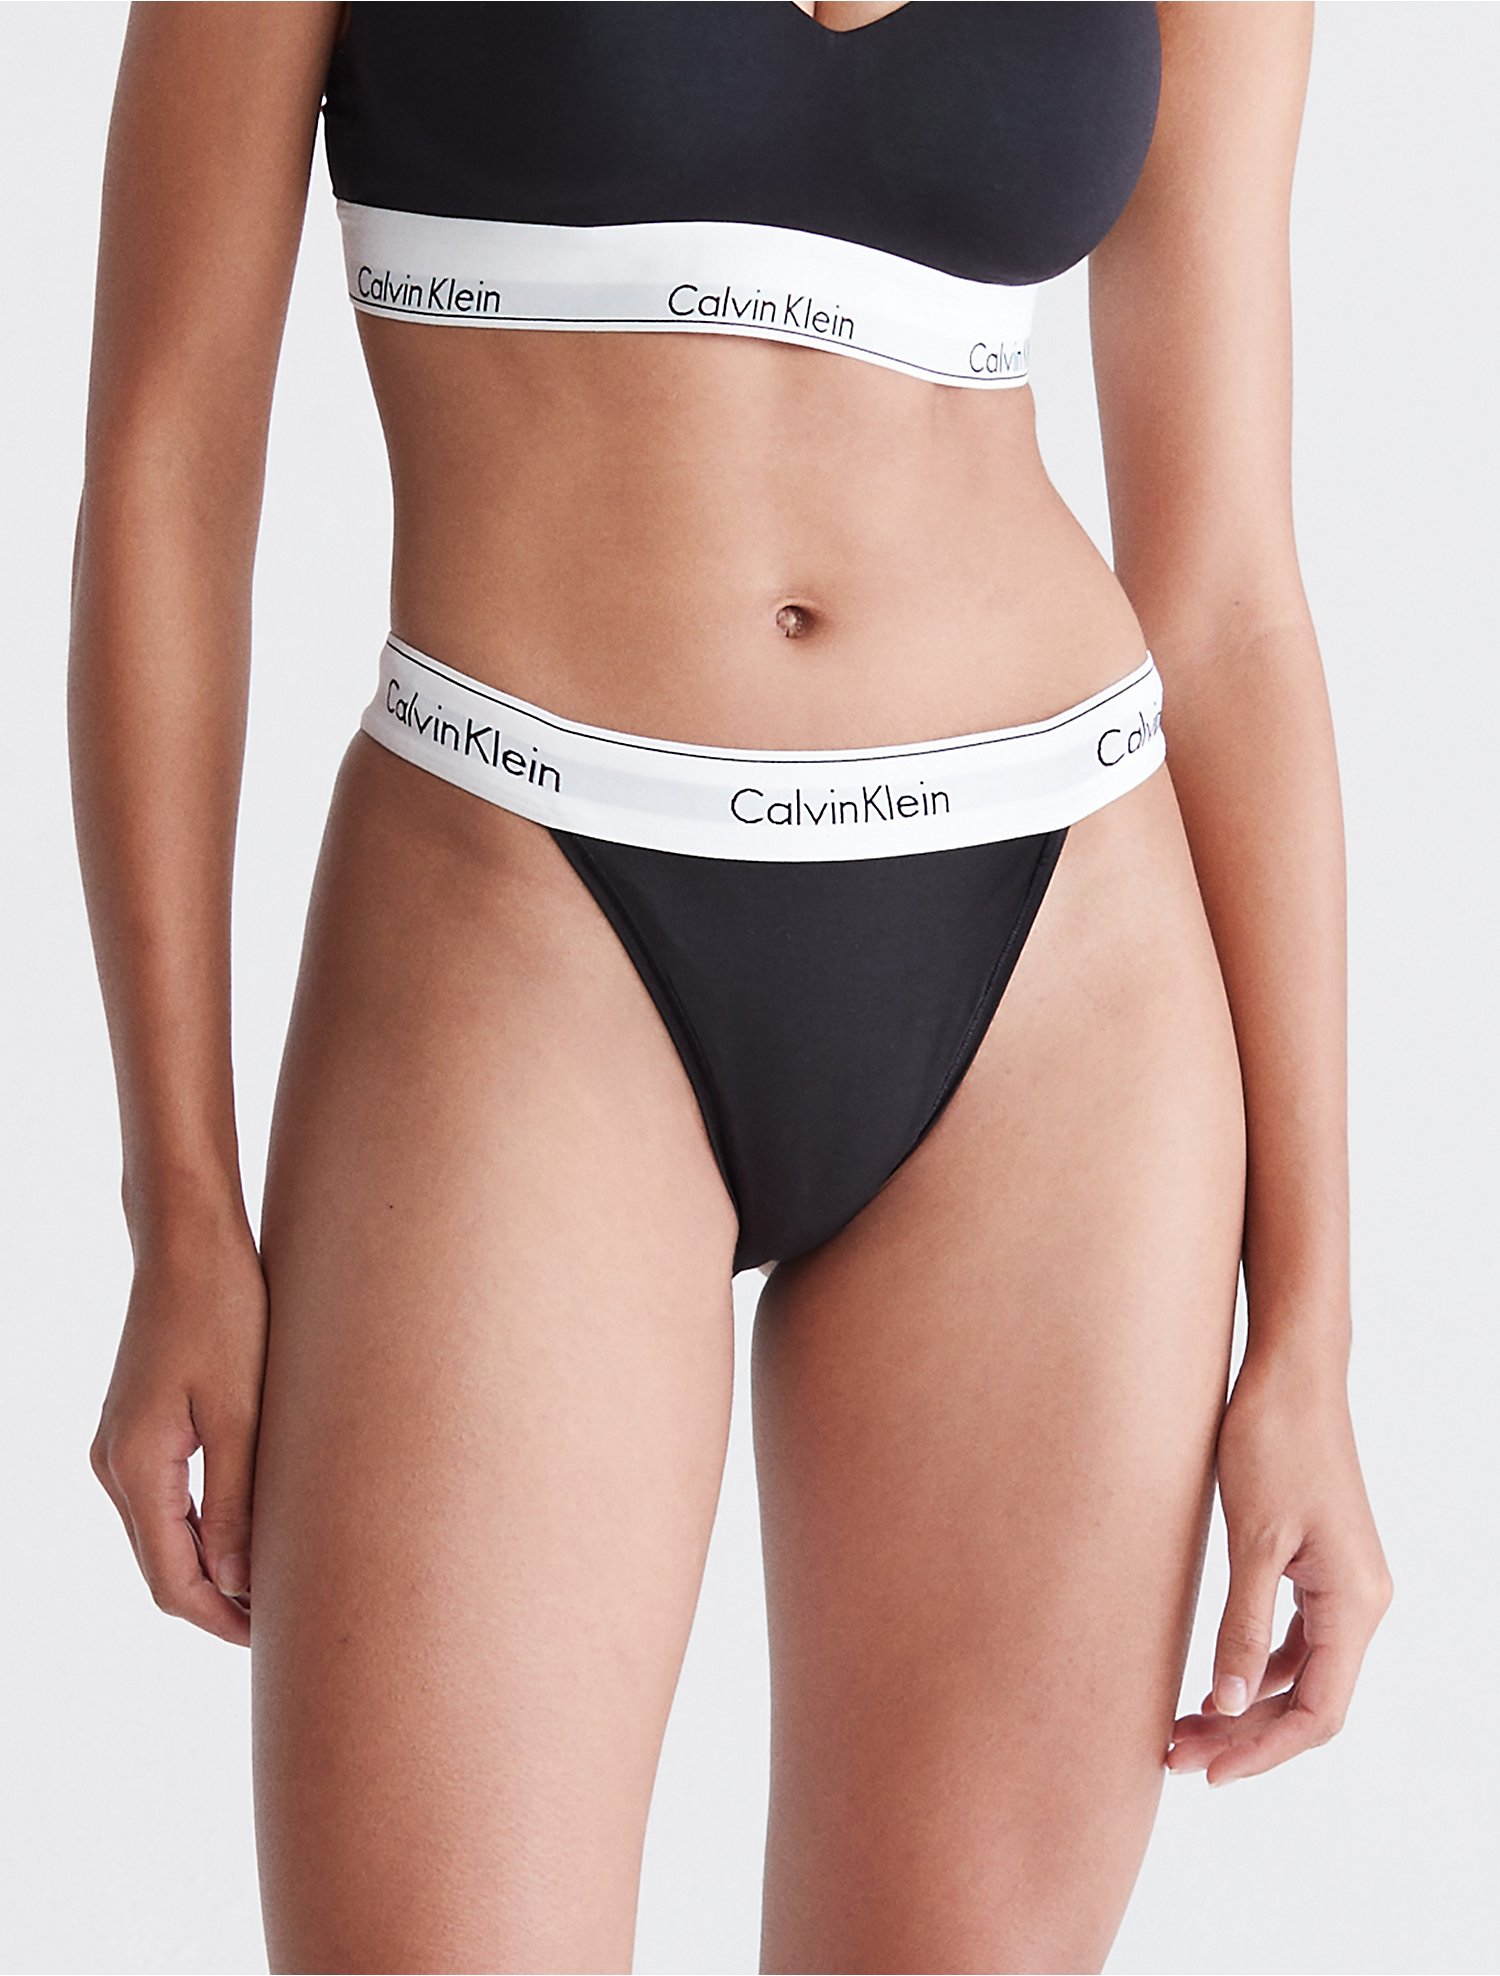 Introducir 34+ imagen calvin klein high cut underwear